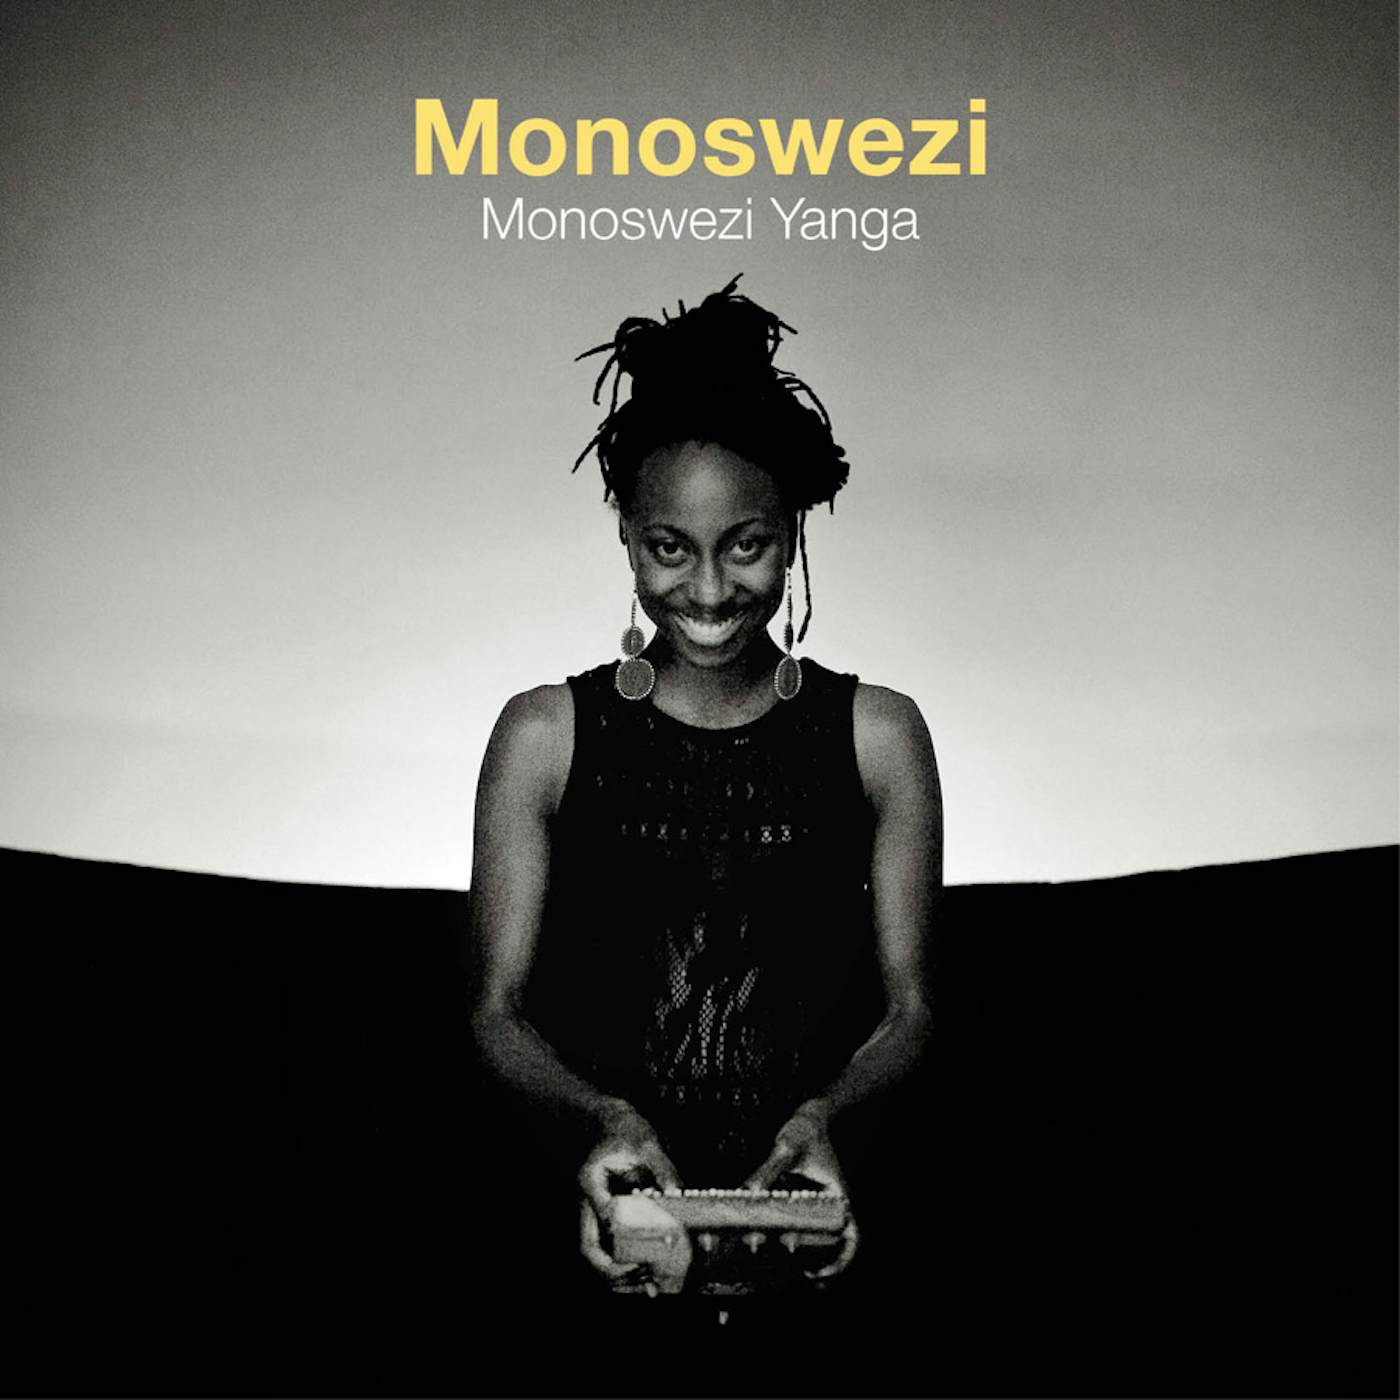 Monoswezi Yanga Vinyl Record